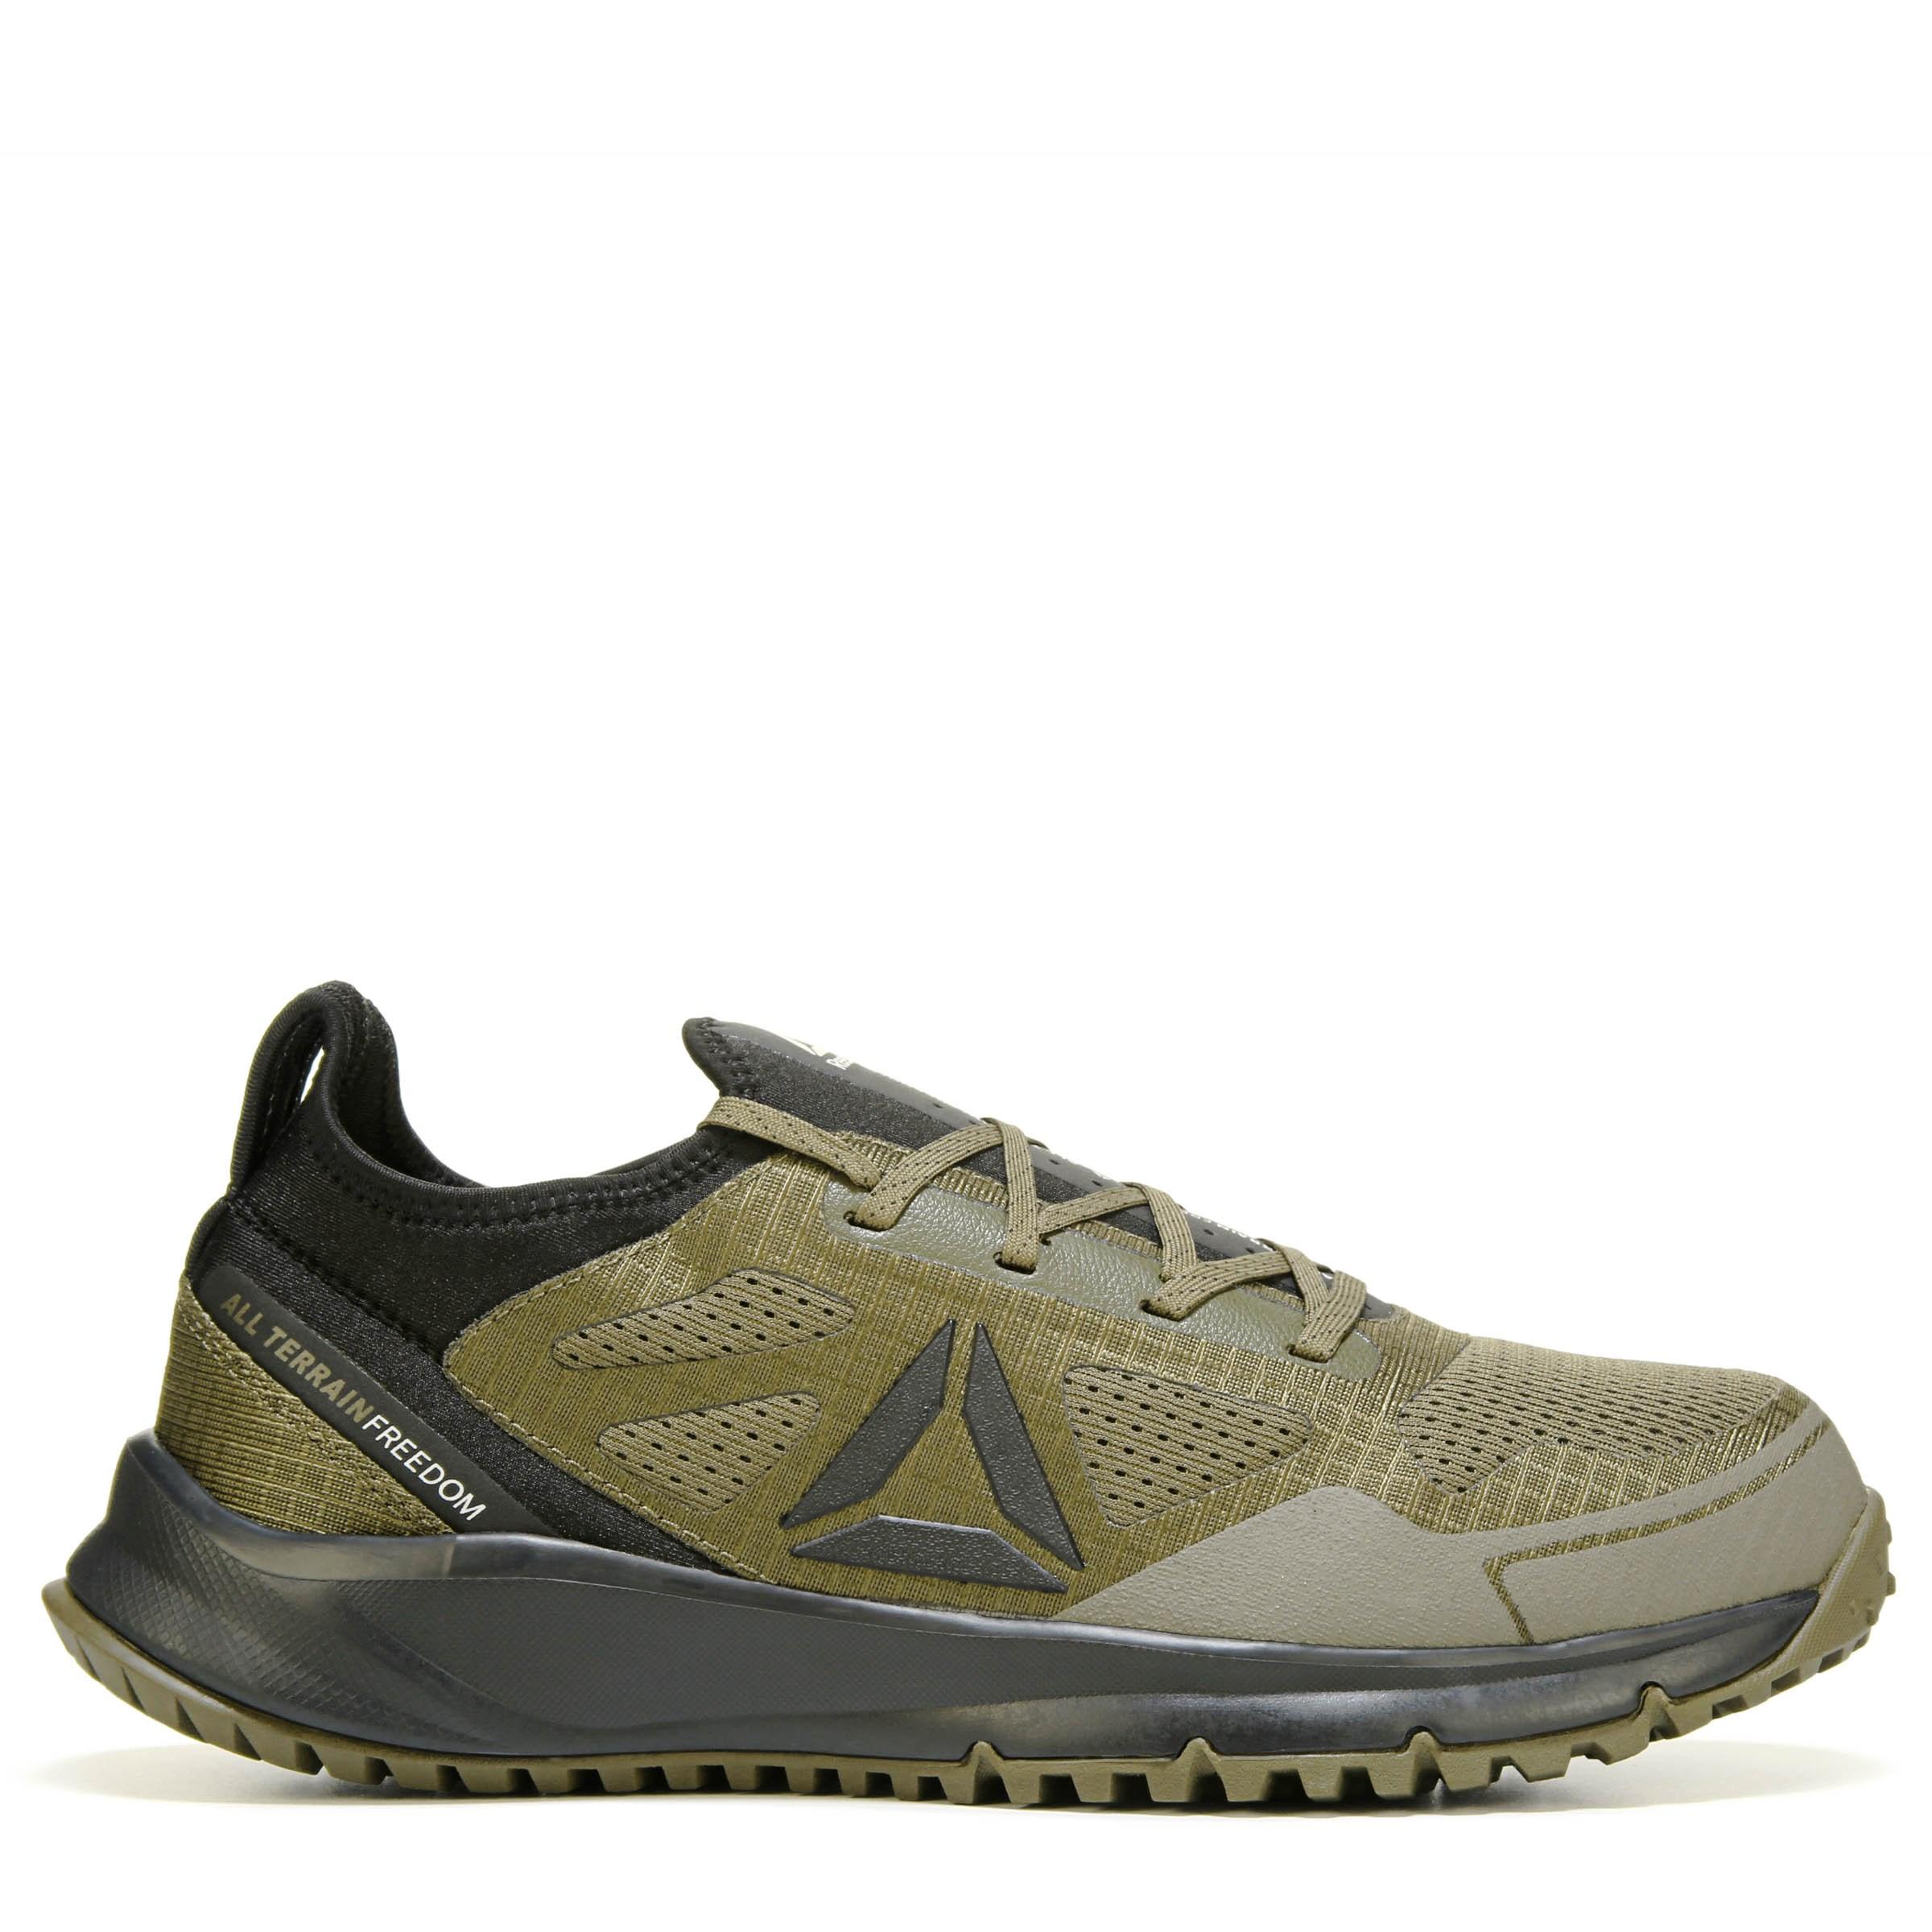 Reebok Neoprene All Terrain Medium/wide Steel Toe Work Shoes in Sage ...